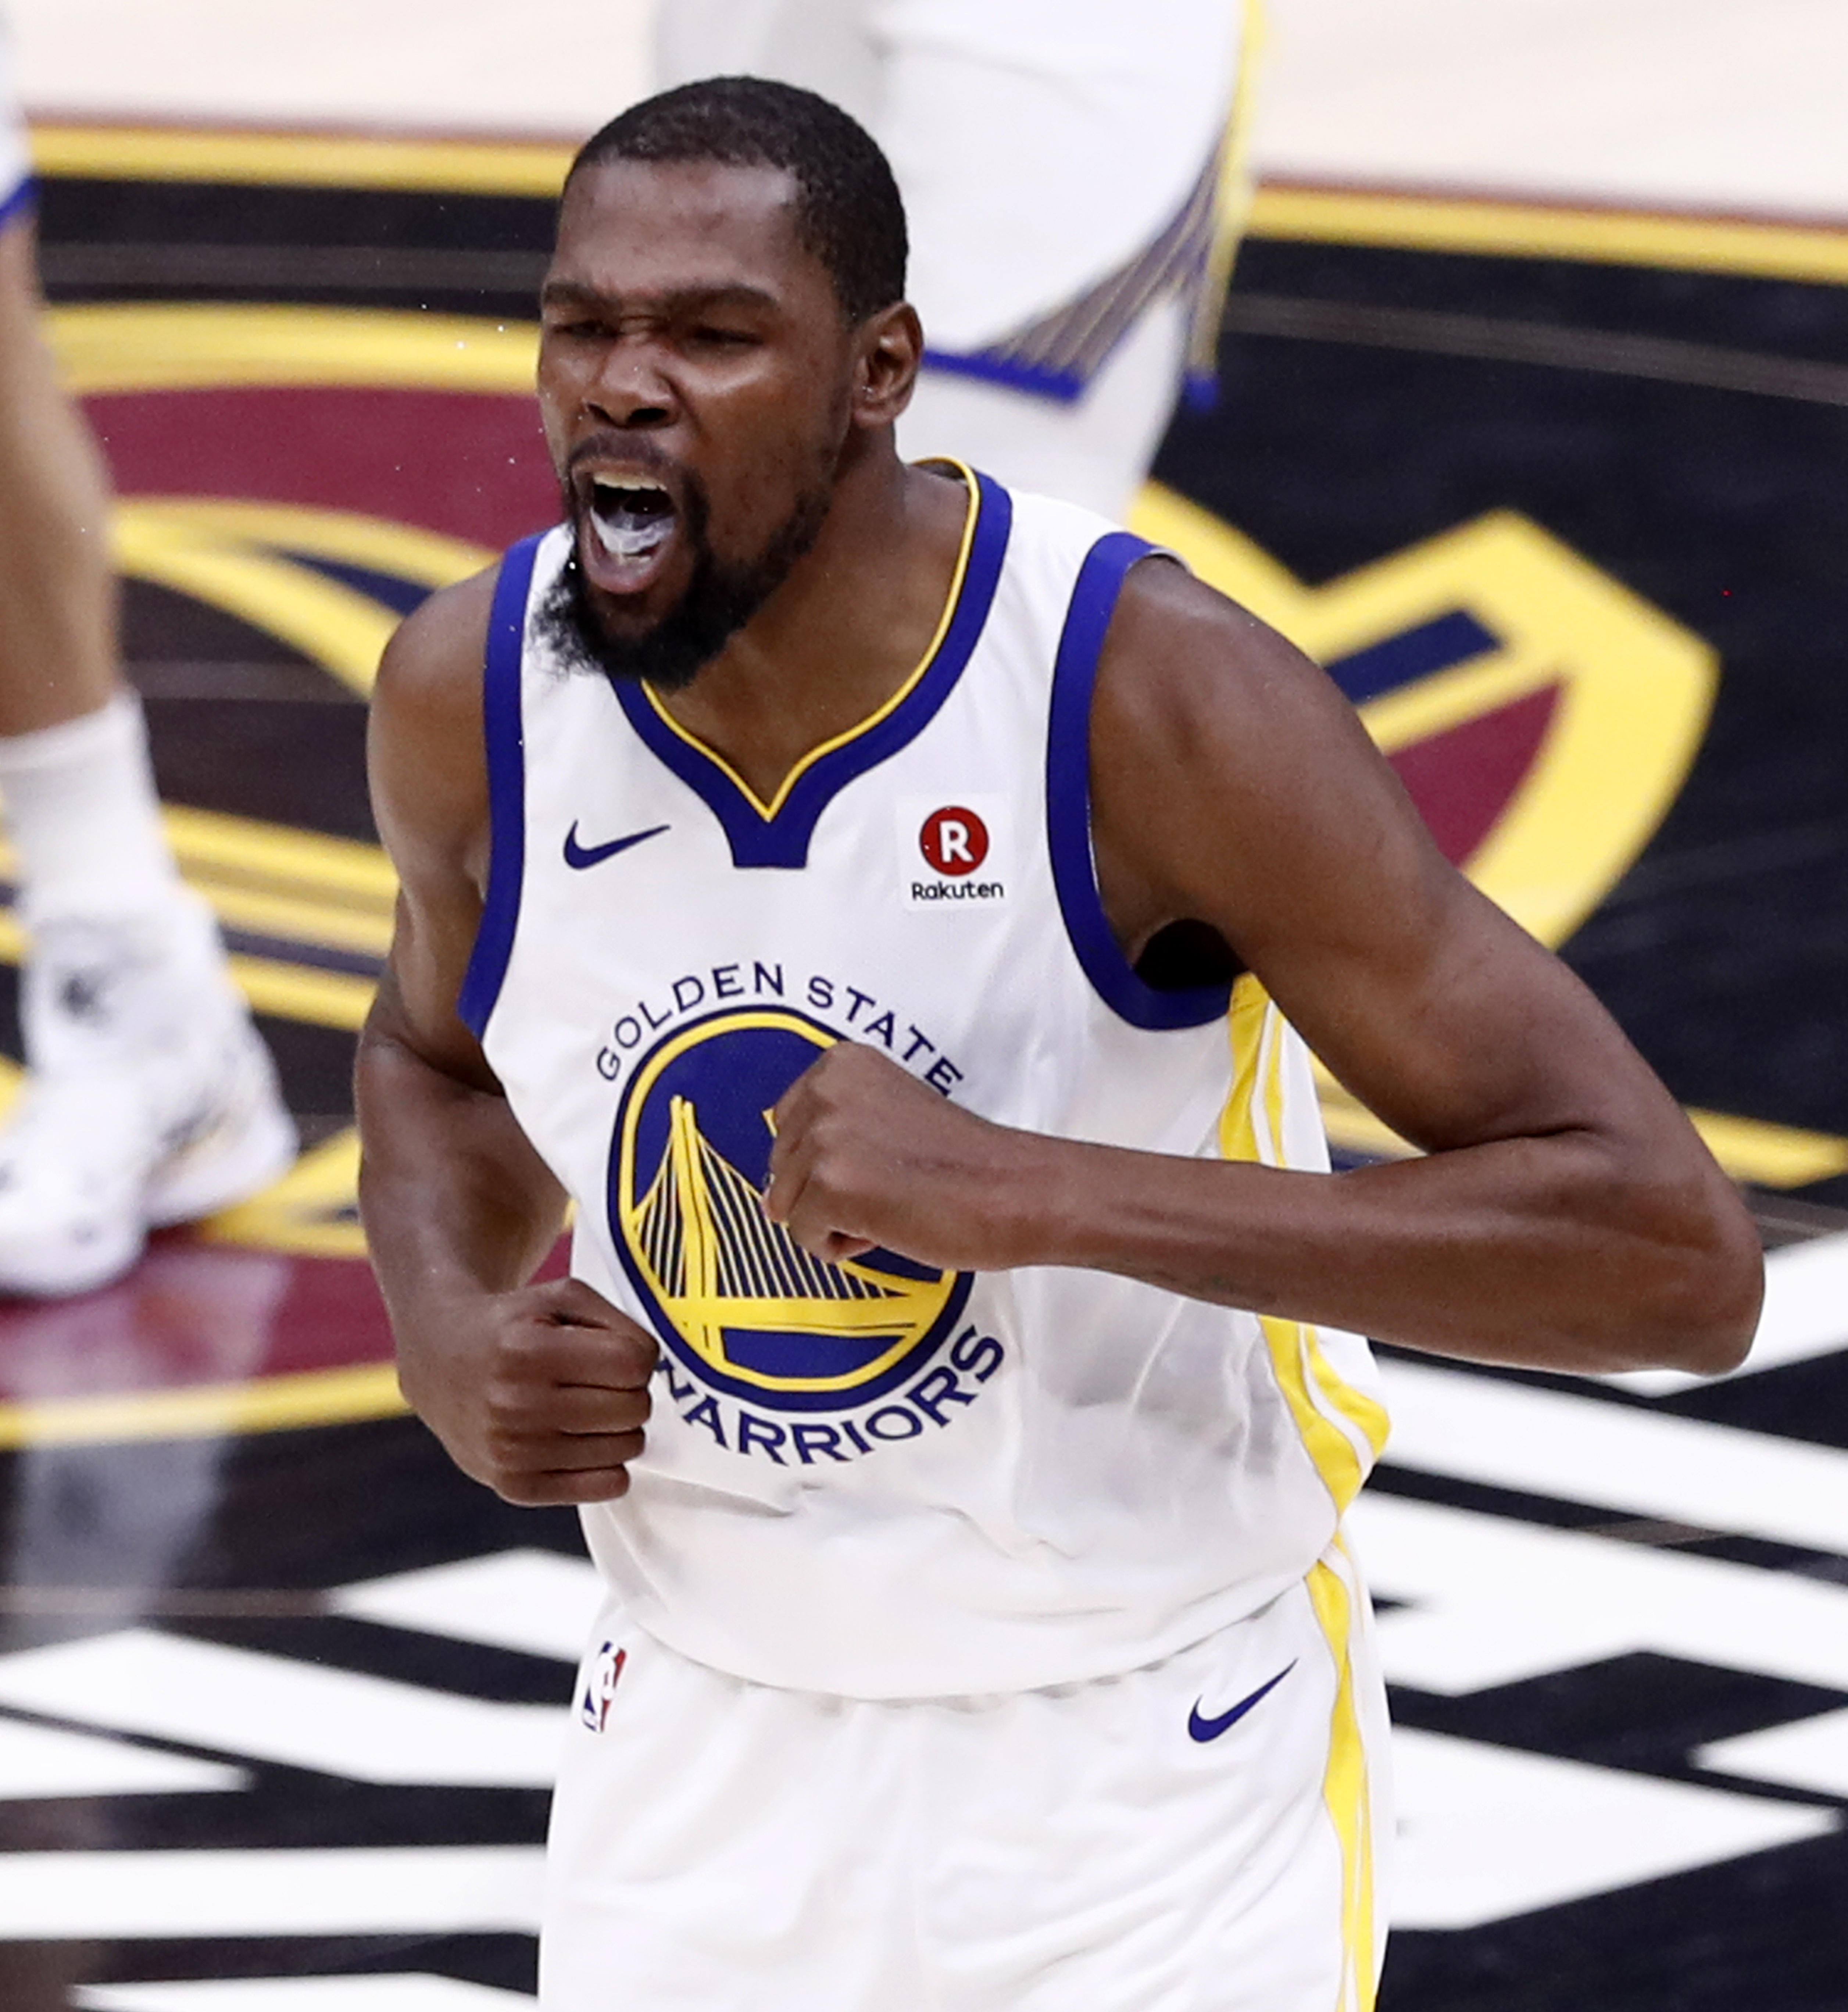 Previa NBA 2018/19: Los Warriors quieren el tercer anillo consecutivo